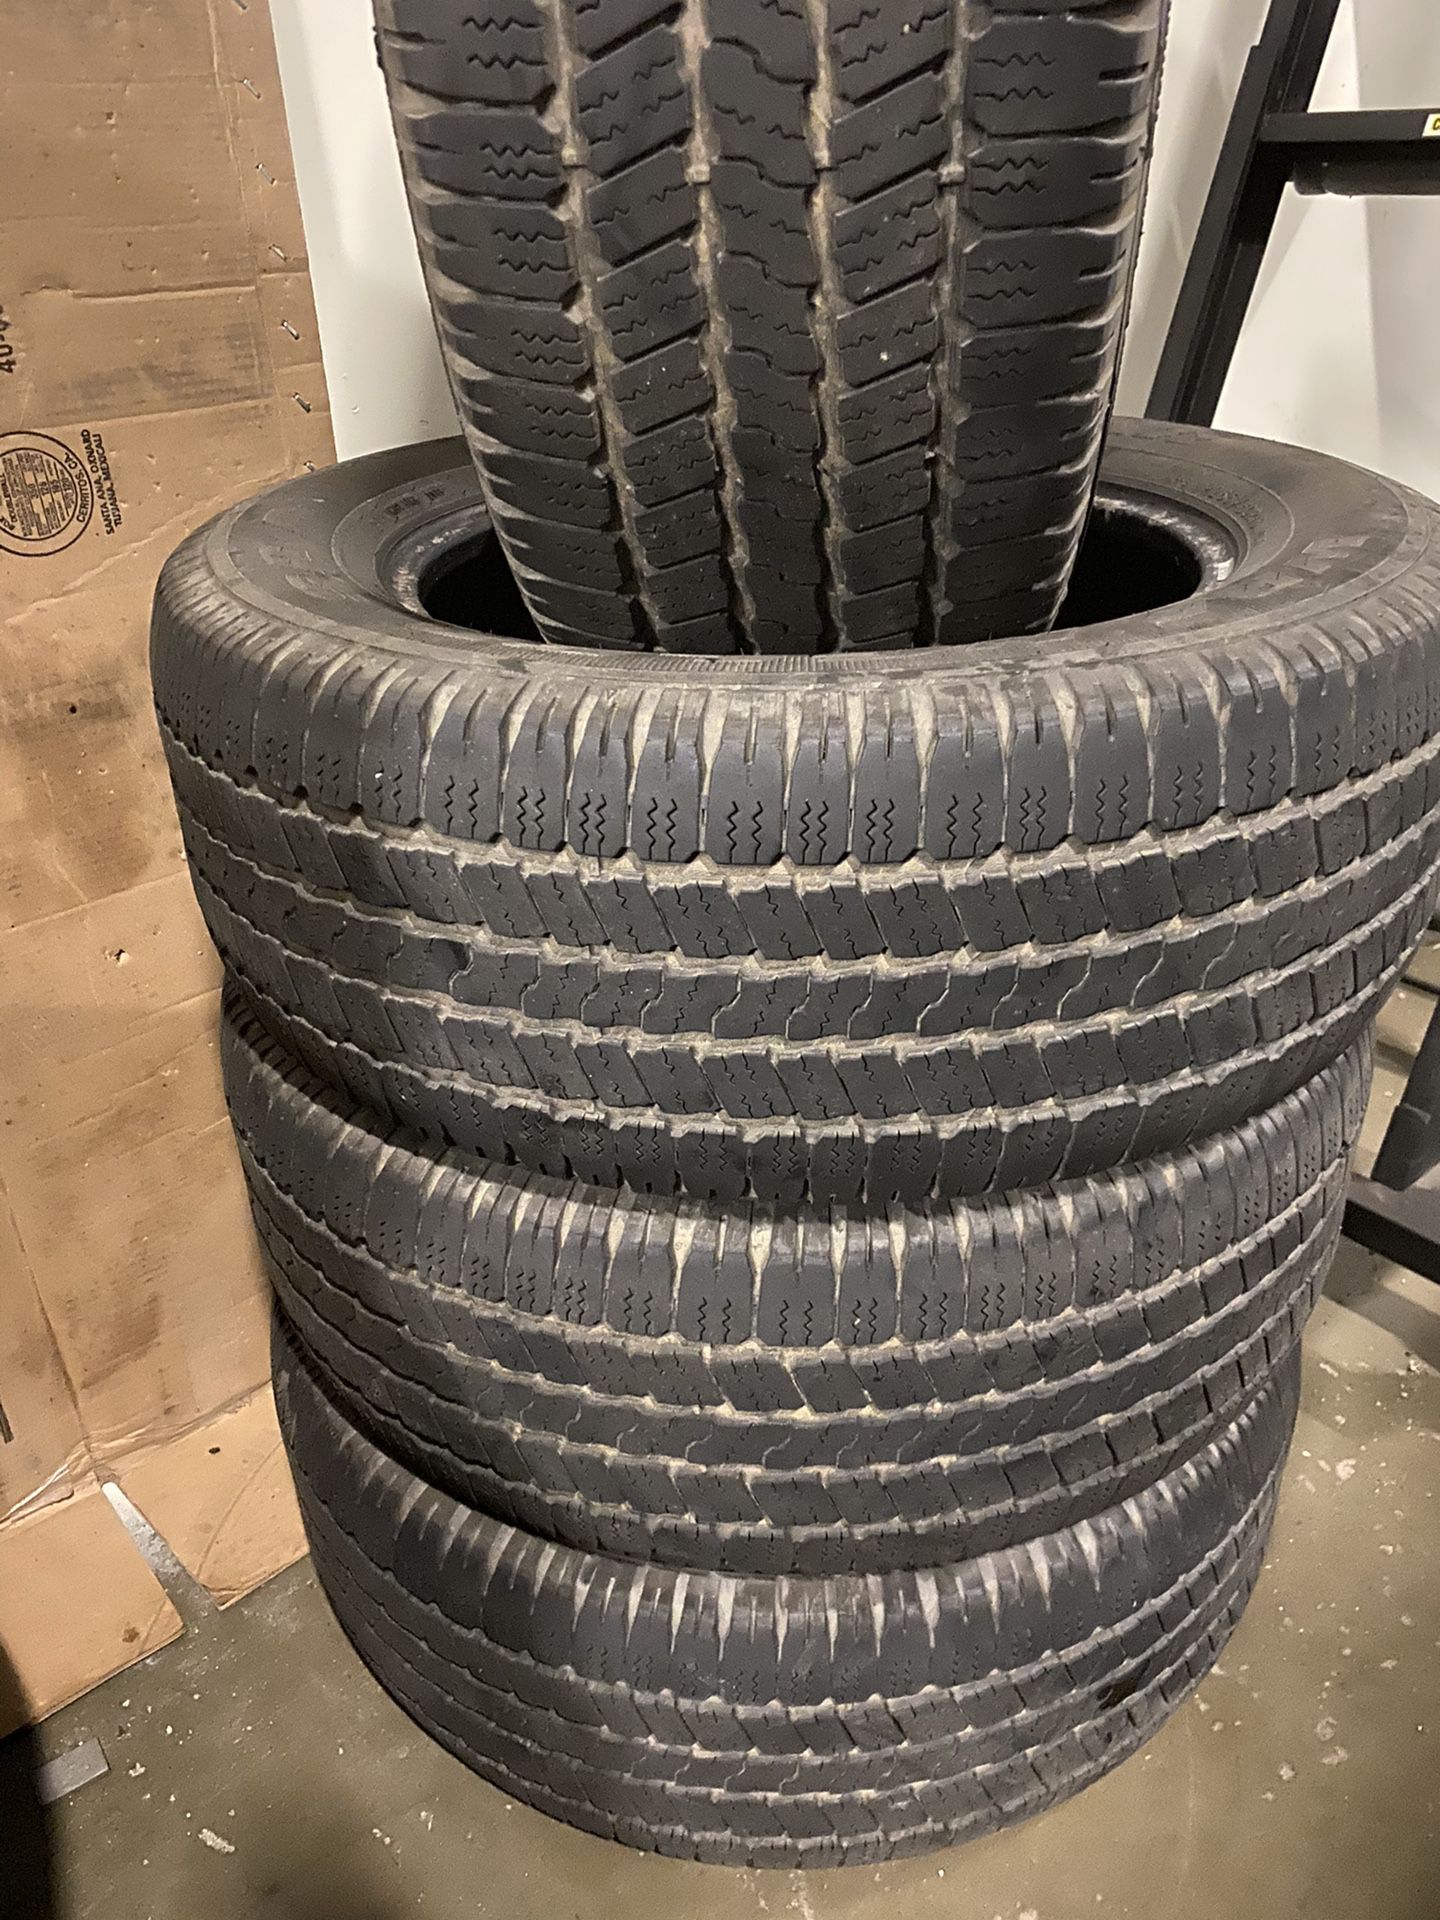 265/60r18 Goodyear Wrangler SRA tires